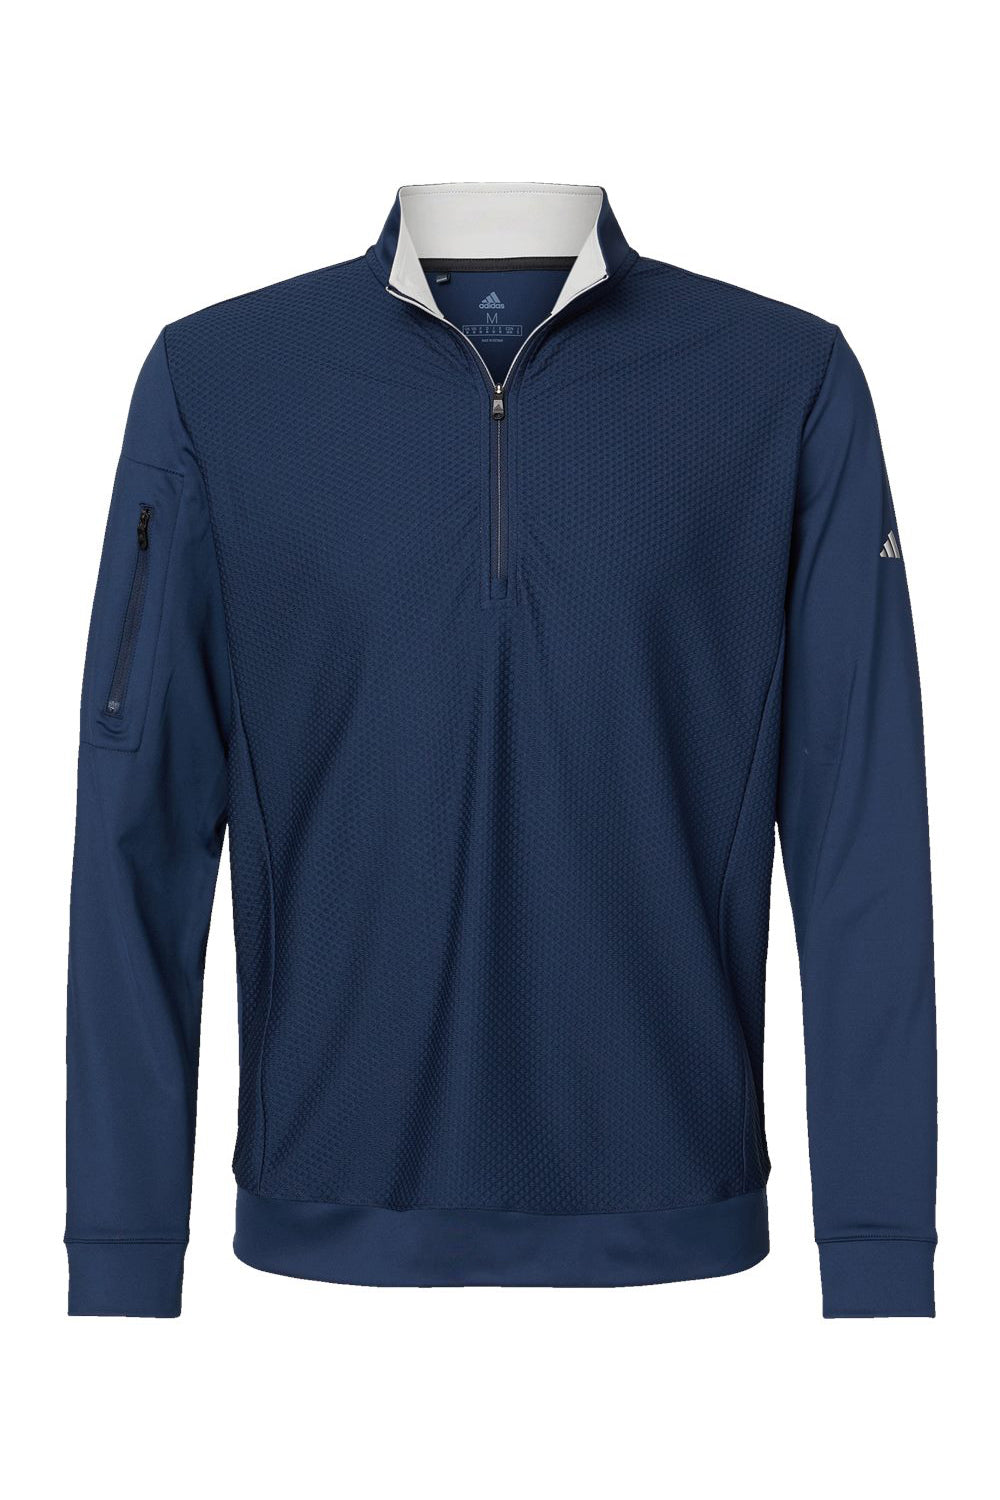 Adidas A295 Mens Performance UPF 50+ 1/4 Zip Sweatshirt Collegiate Navy Blue Flat Front